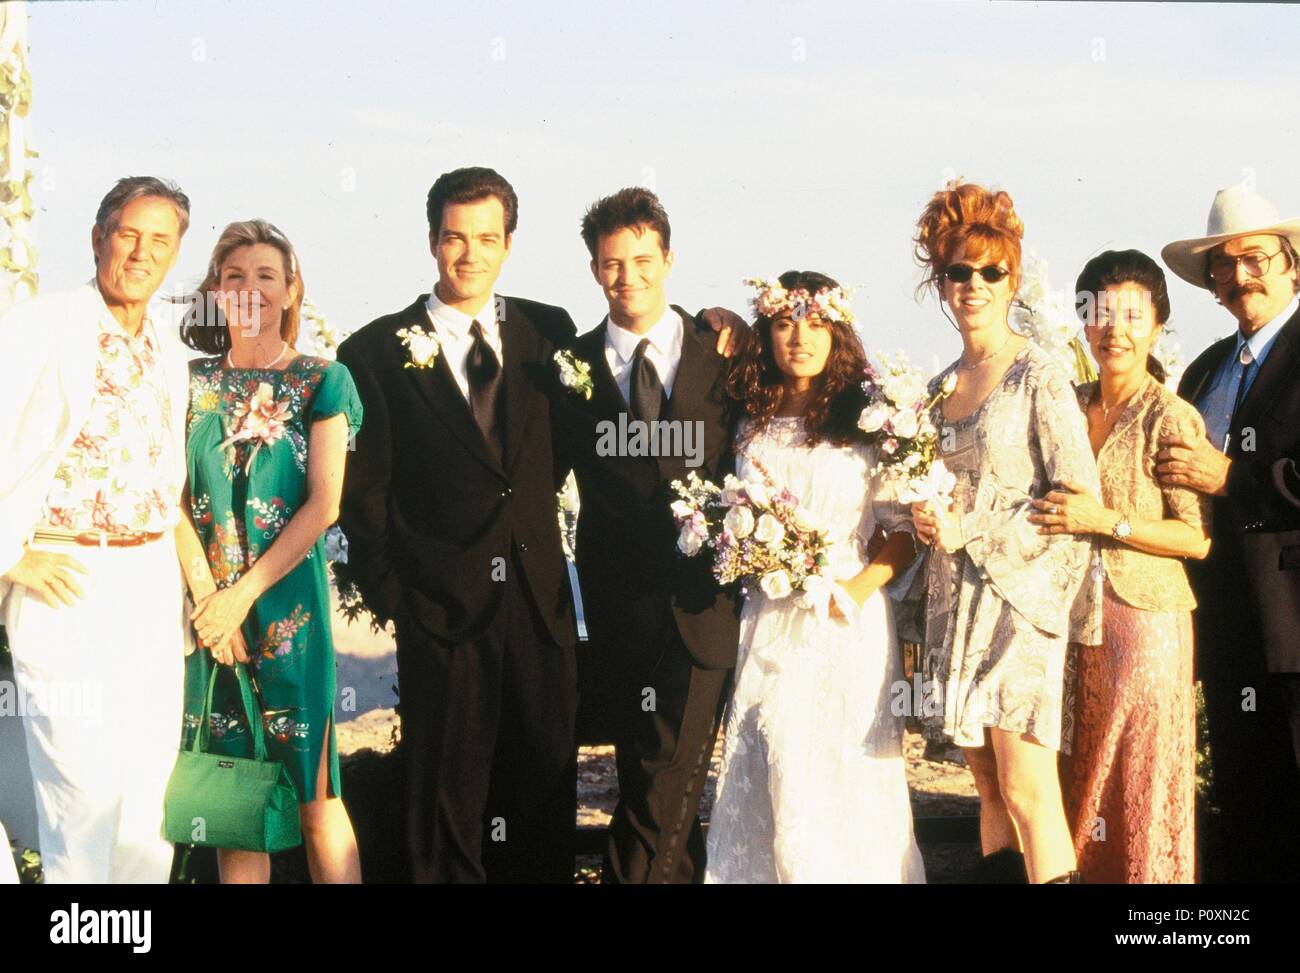 Original Film Title: FOOLS RUSH IN.  English Title: FOOLS RUSH IN.  Film Director: ANDY TENNANT.  Year: 1997. Credit: COLUMBIA TRI STAR / Album Stock Photo